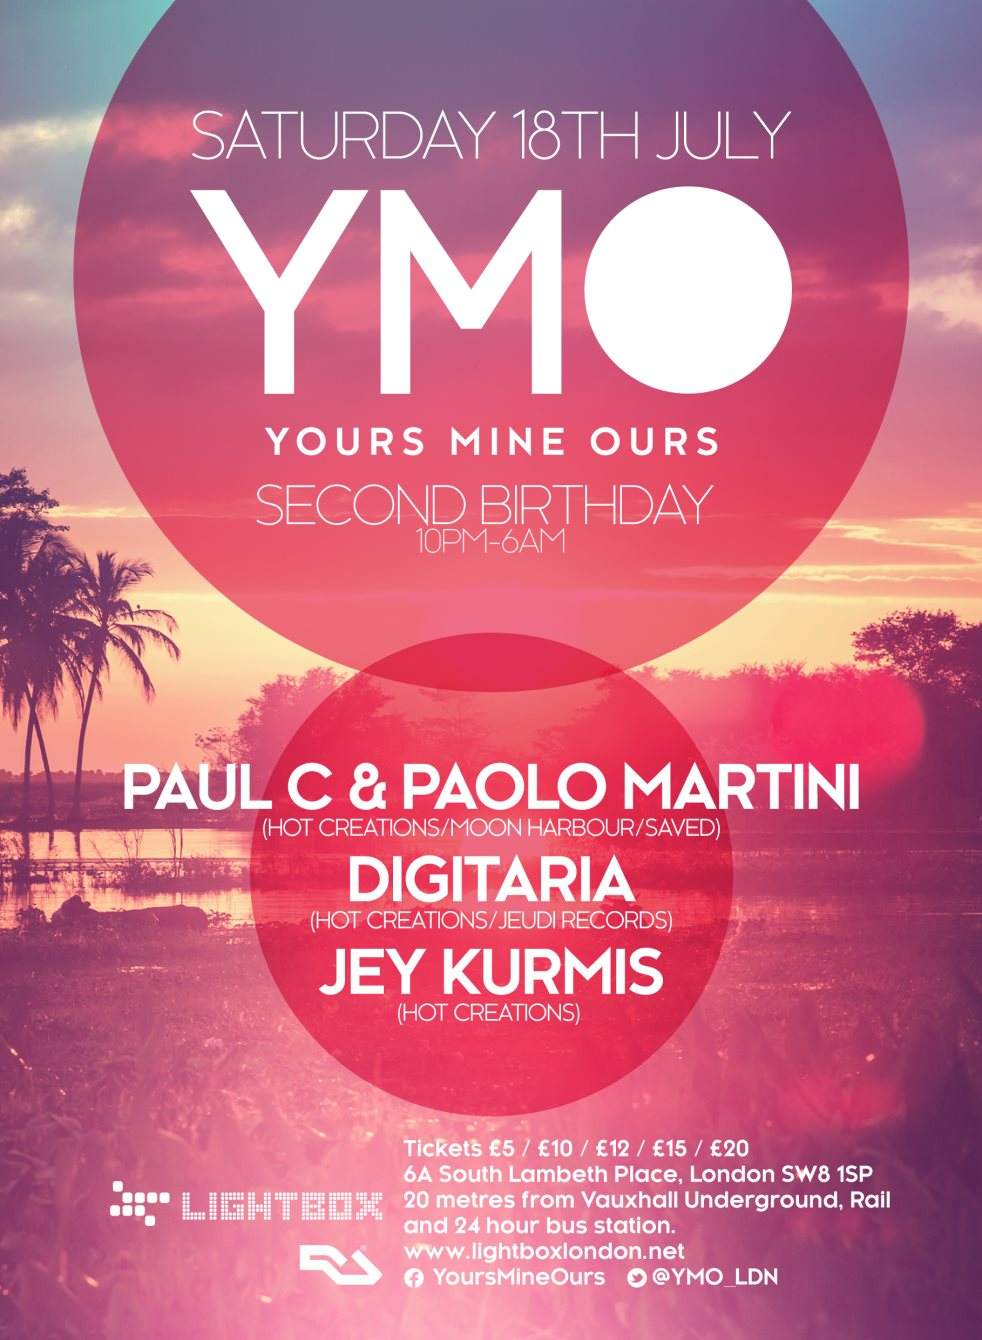 YMO 2nd Birthday with Paul C & Paolo Martini / Digitaria / Jey Kurmis - フライヤー表